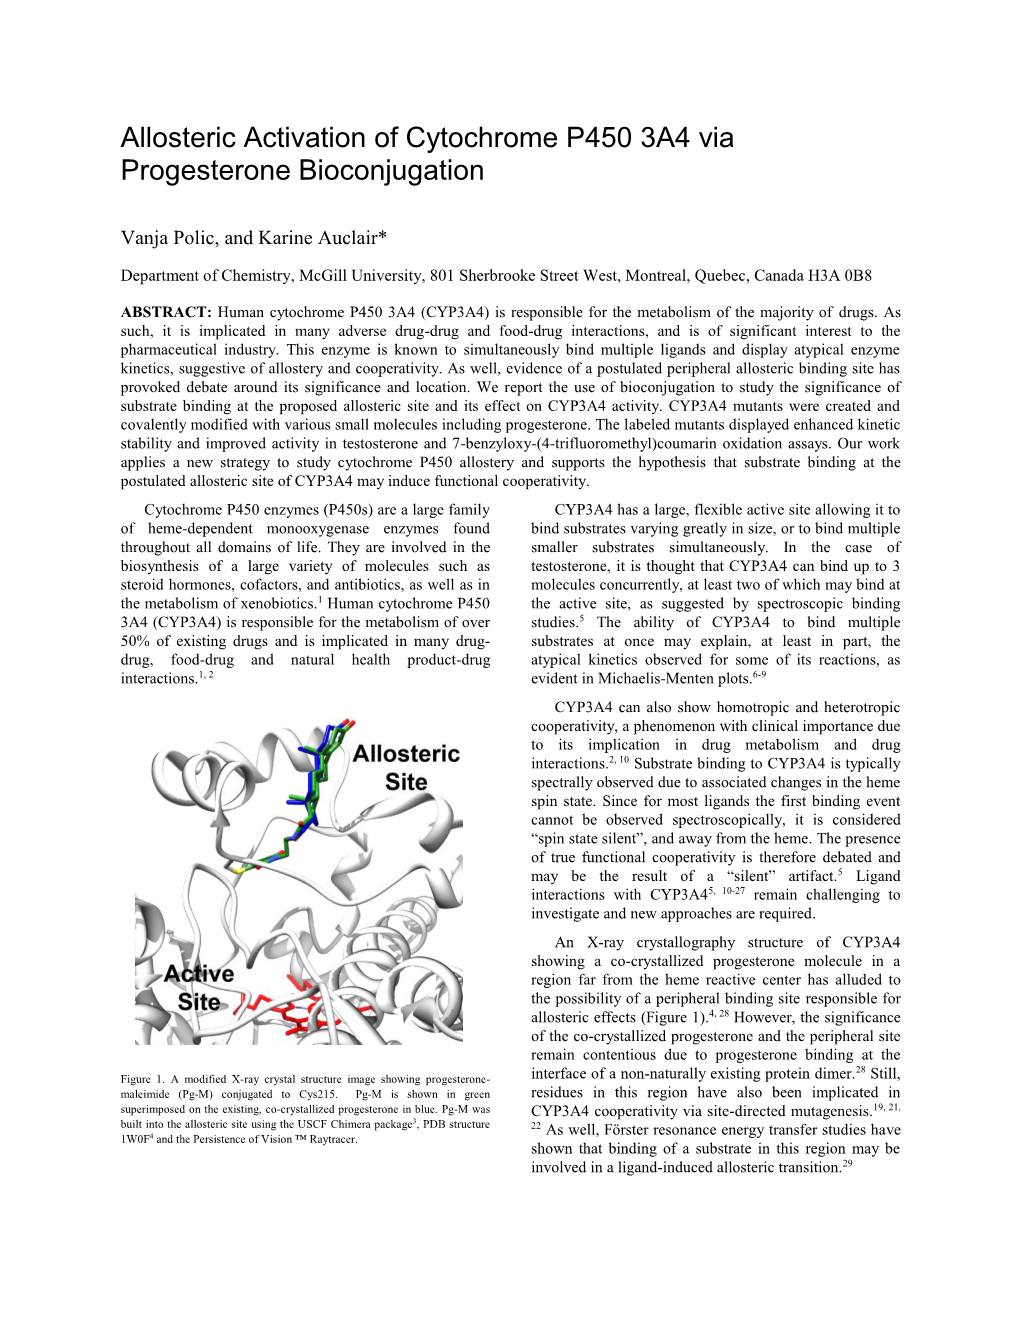 Allosteric Activation of Cytochrome P450 3A4 Via Progesterone Bioconjugation